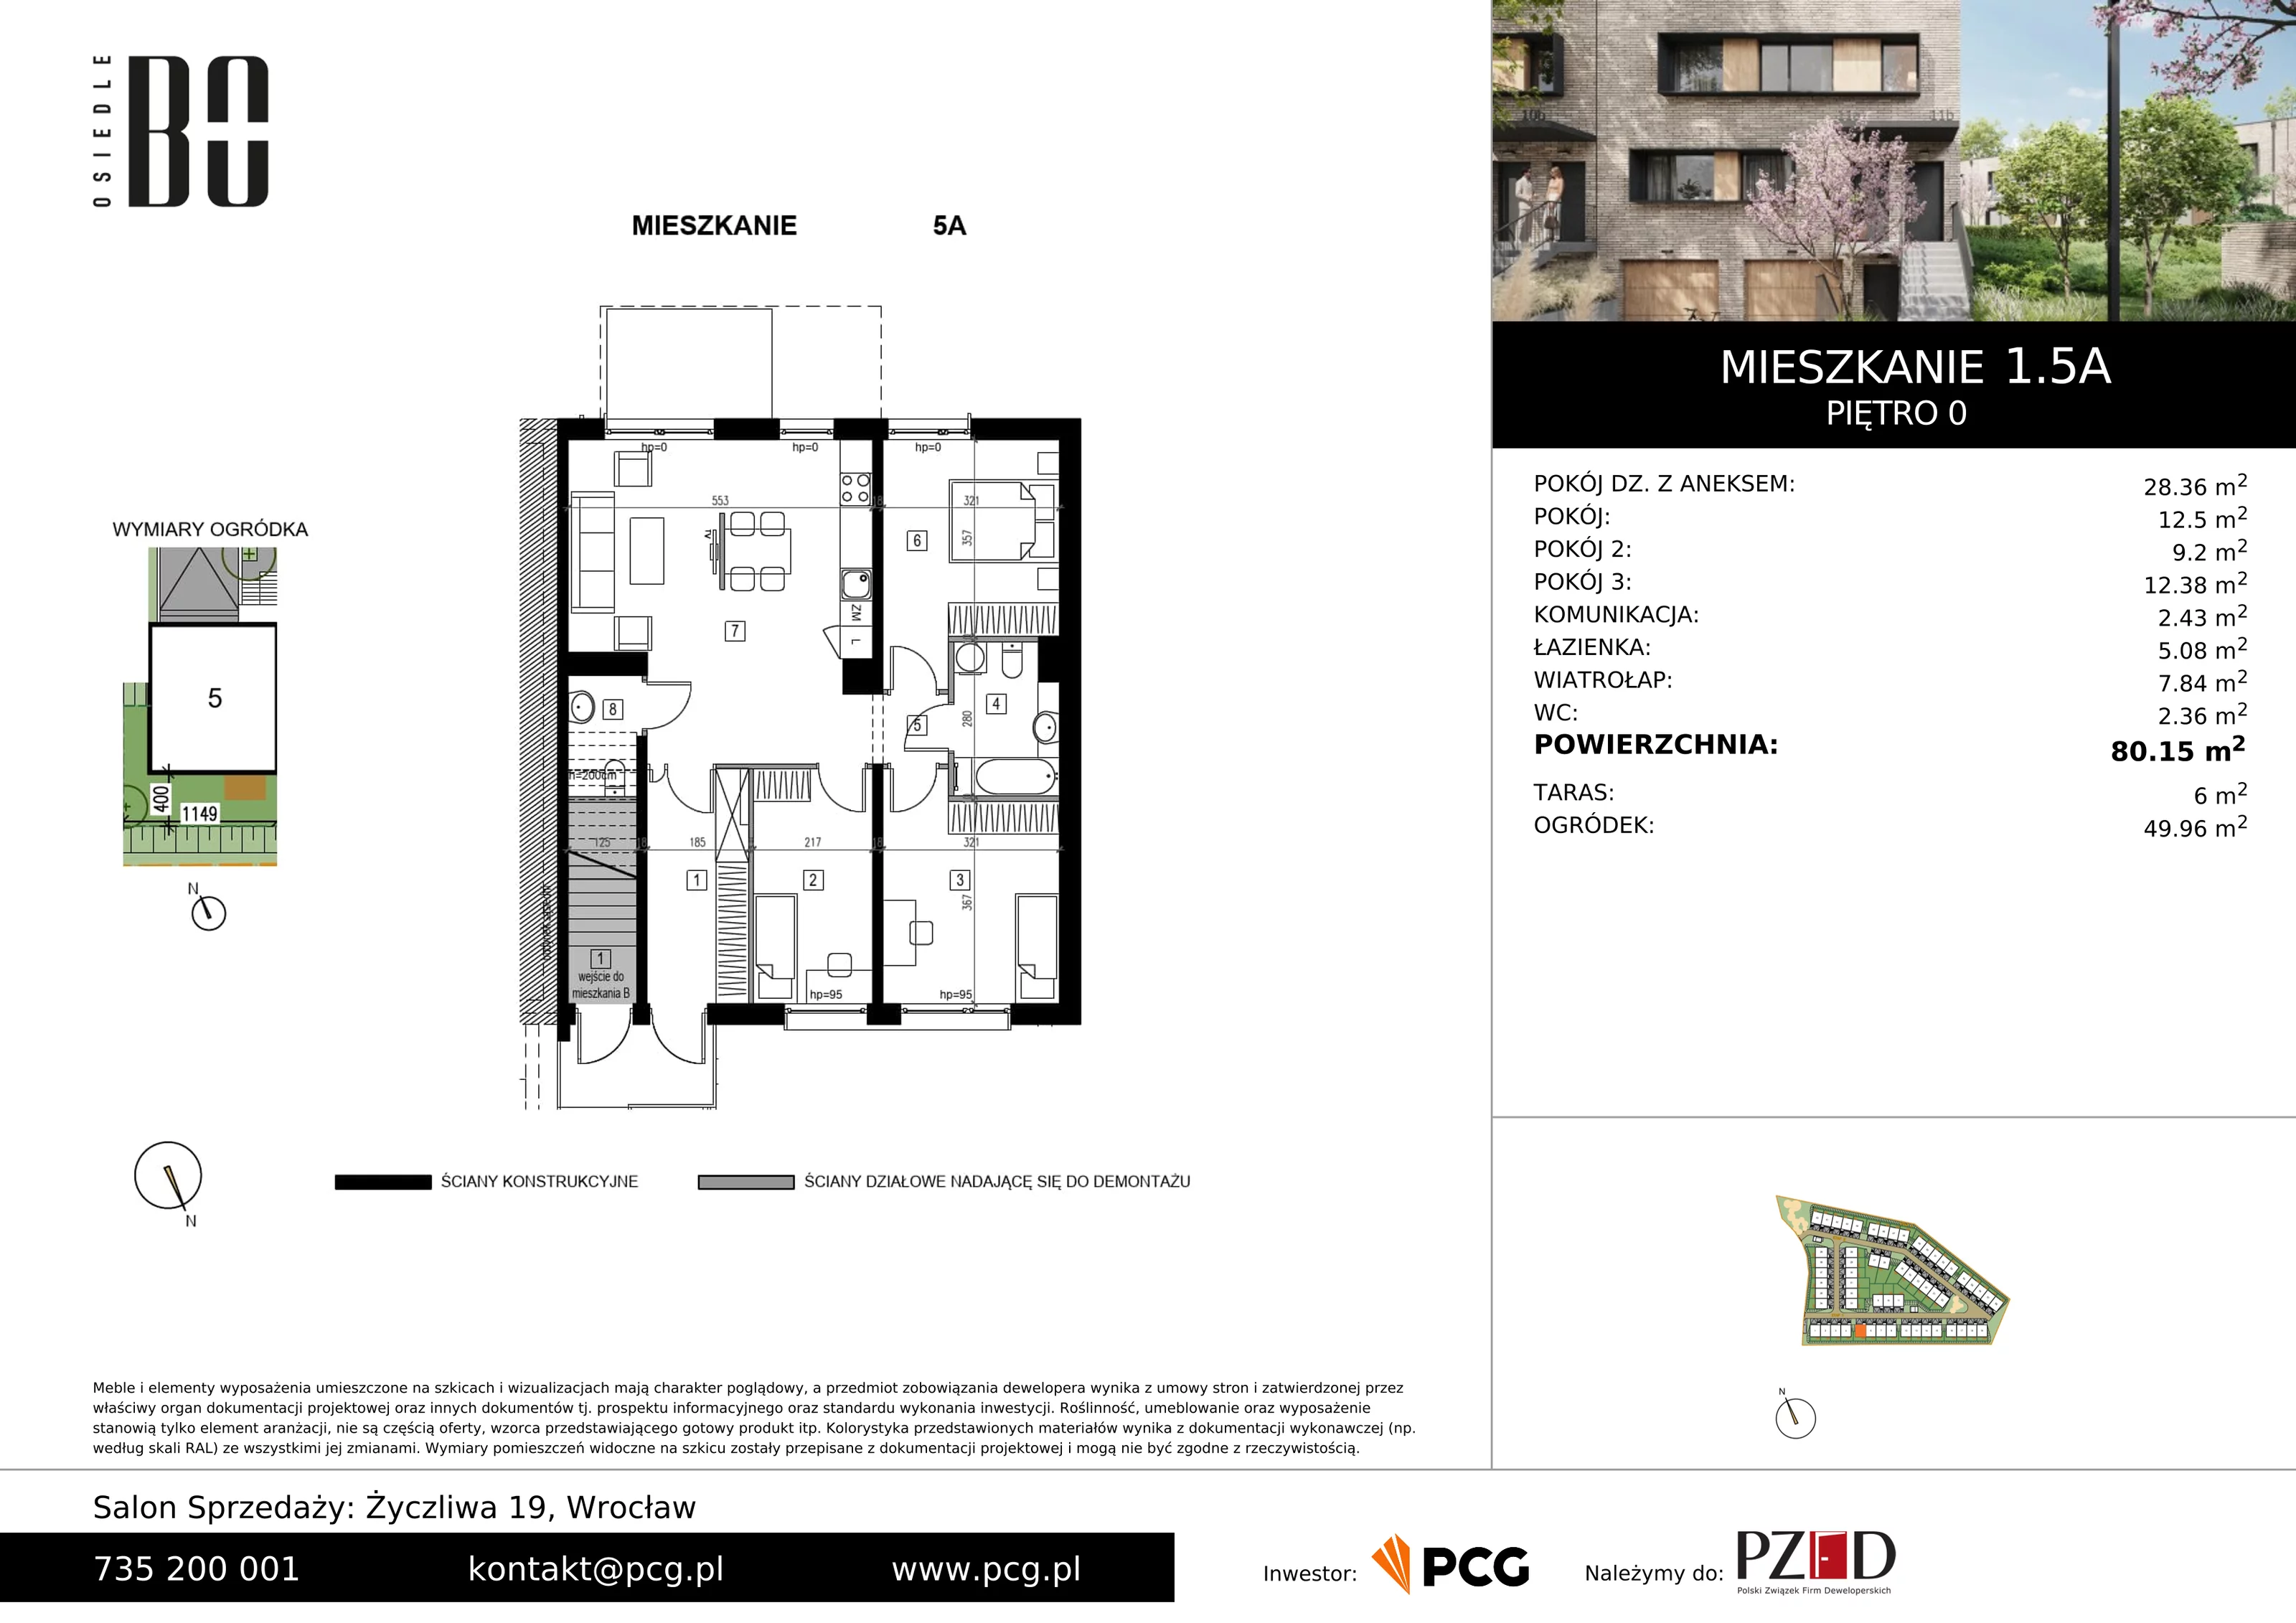 Apartament 80,15 m², parter, oferta nr 1.5A, Osiedle BO, Wrocław, Kowale, ul. Bociana